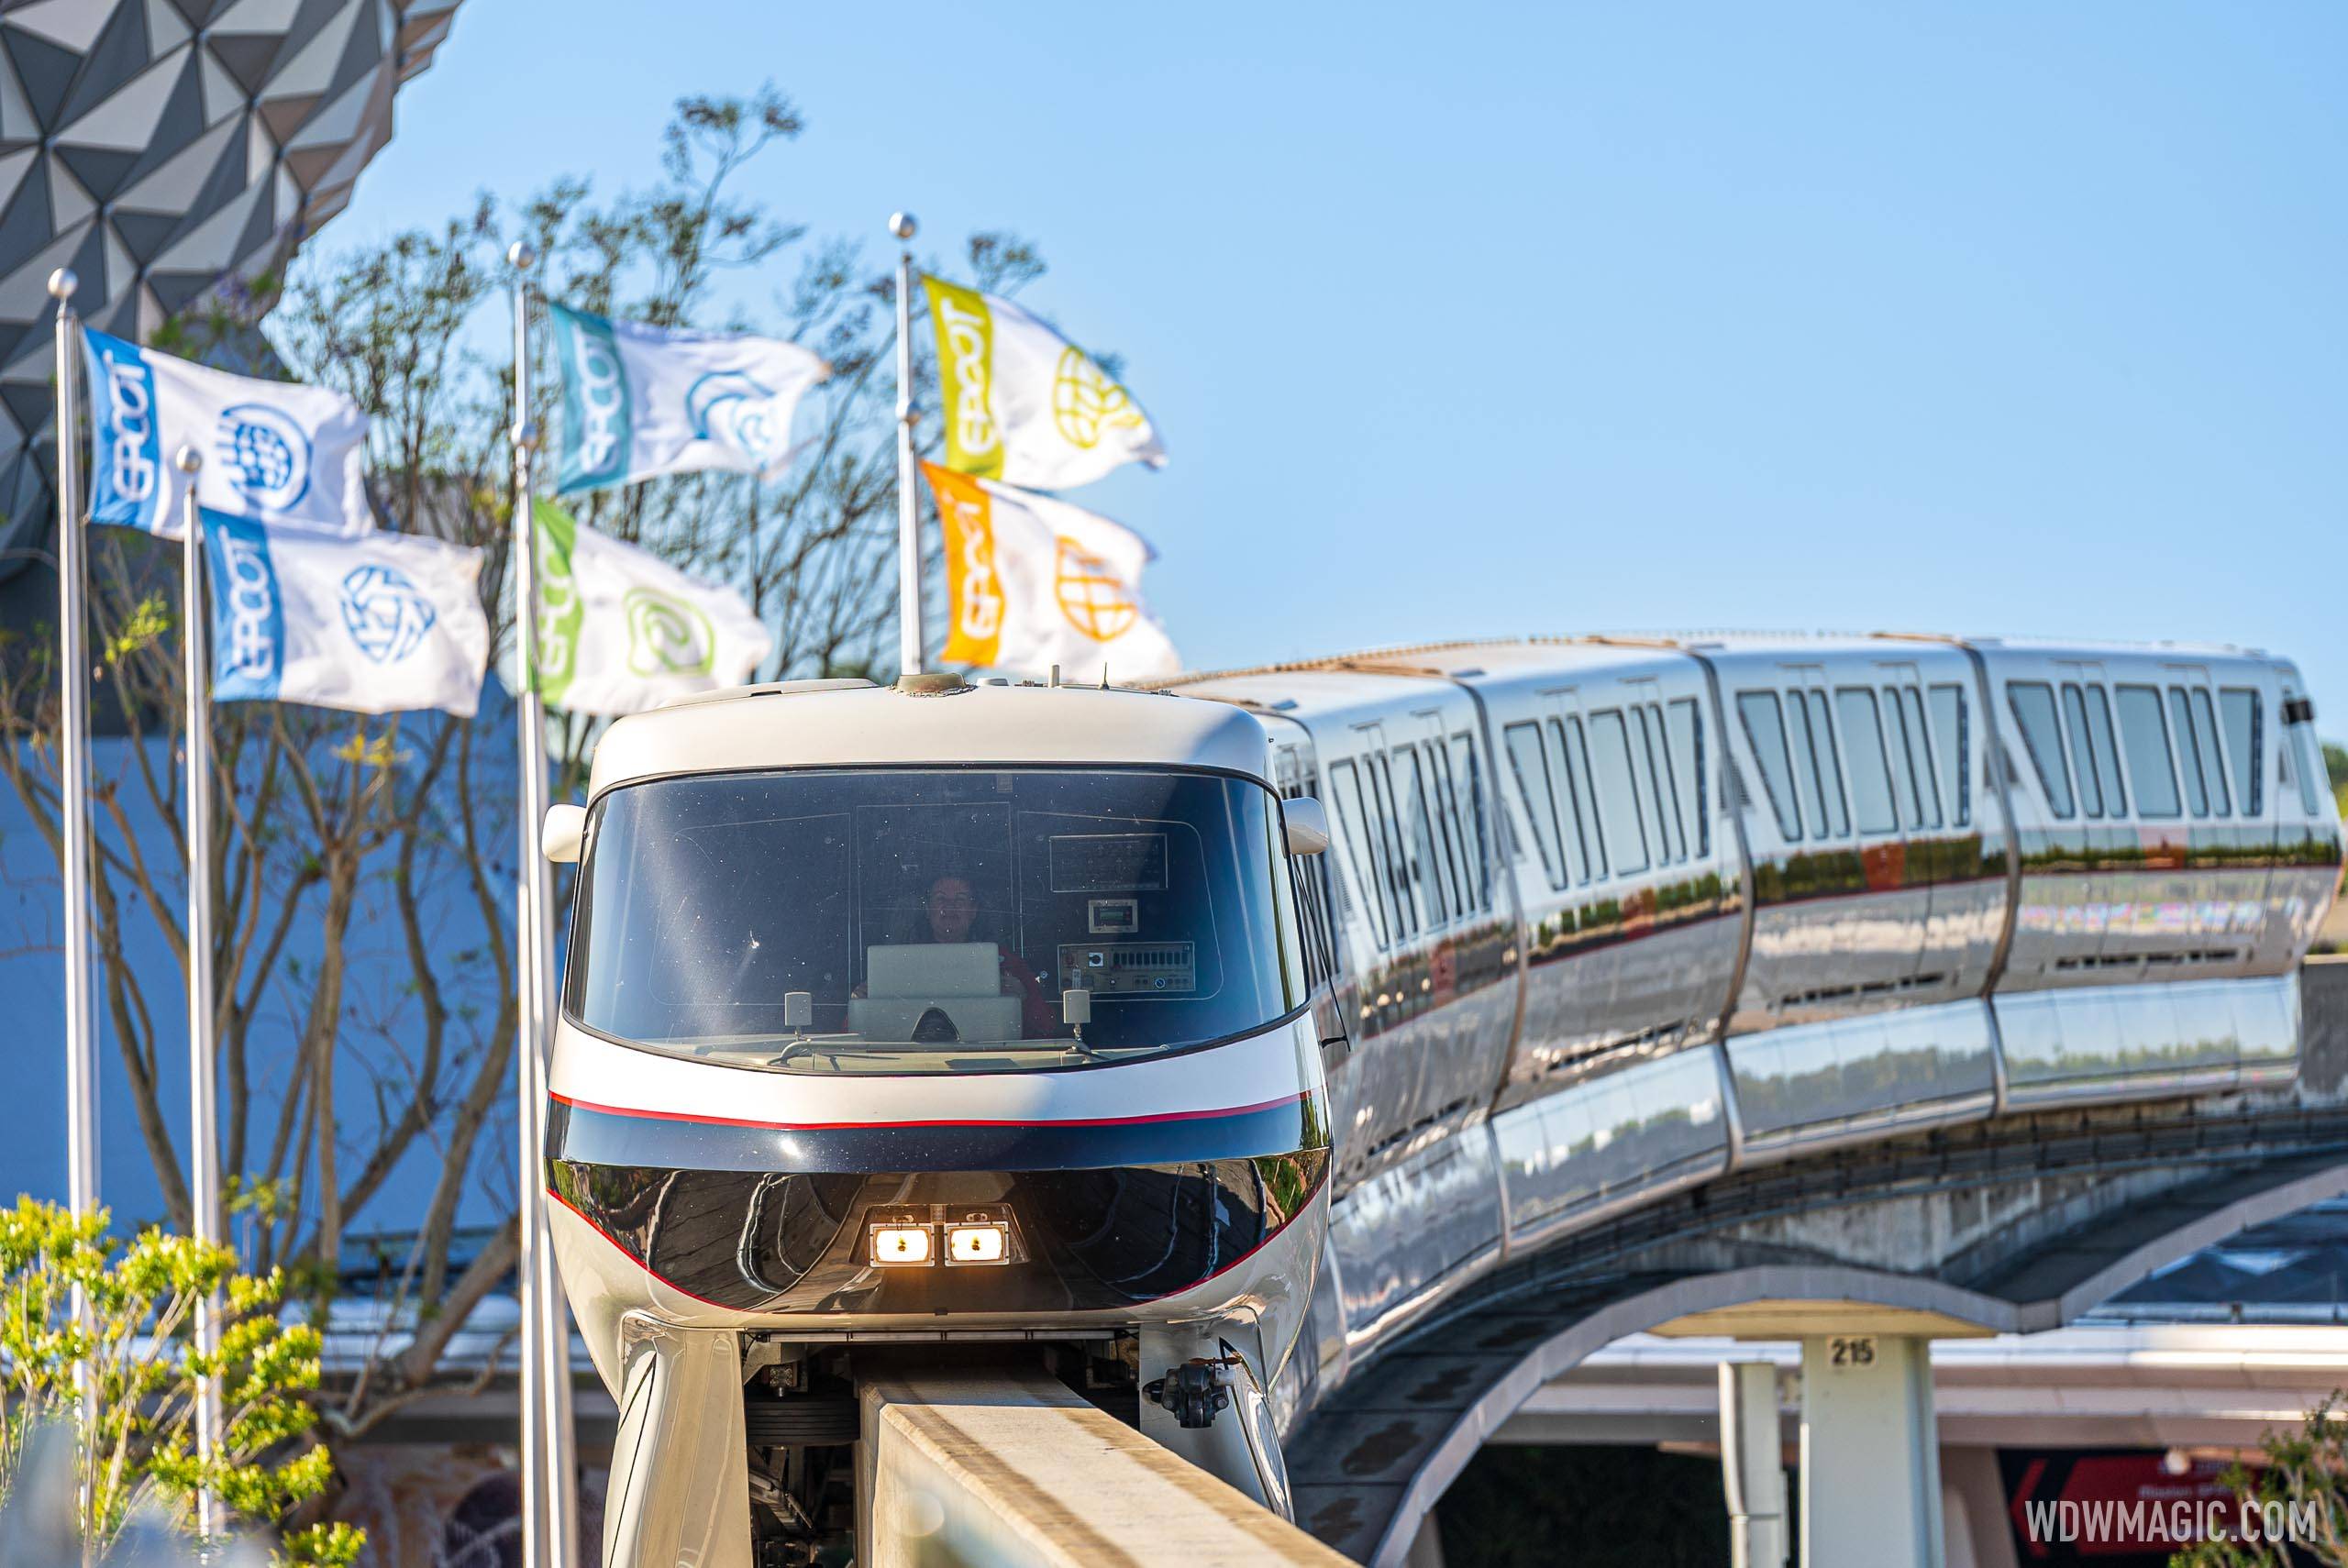 Walt Disney World Monorail System overview